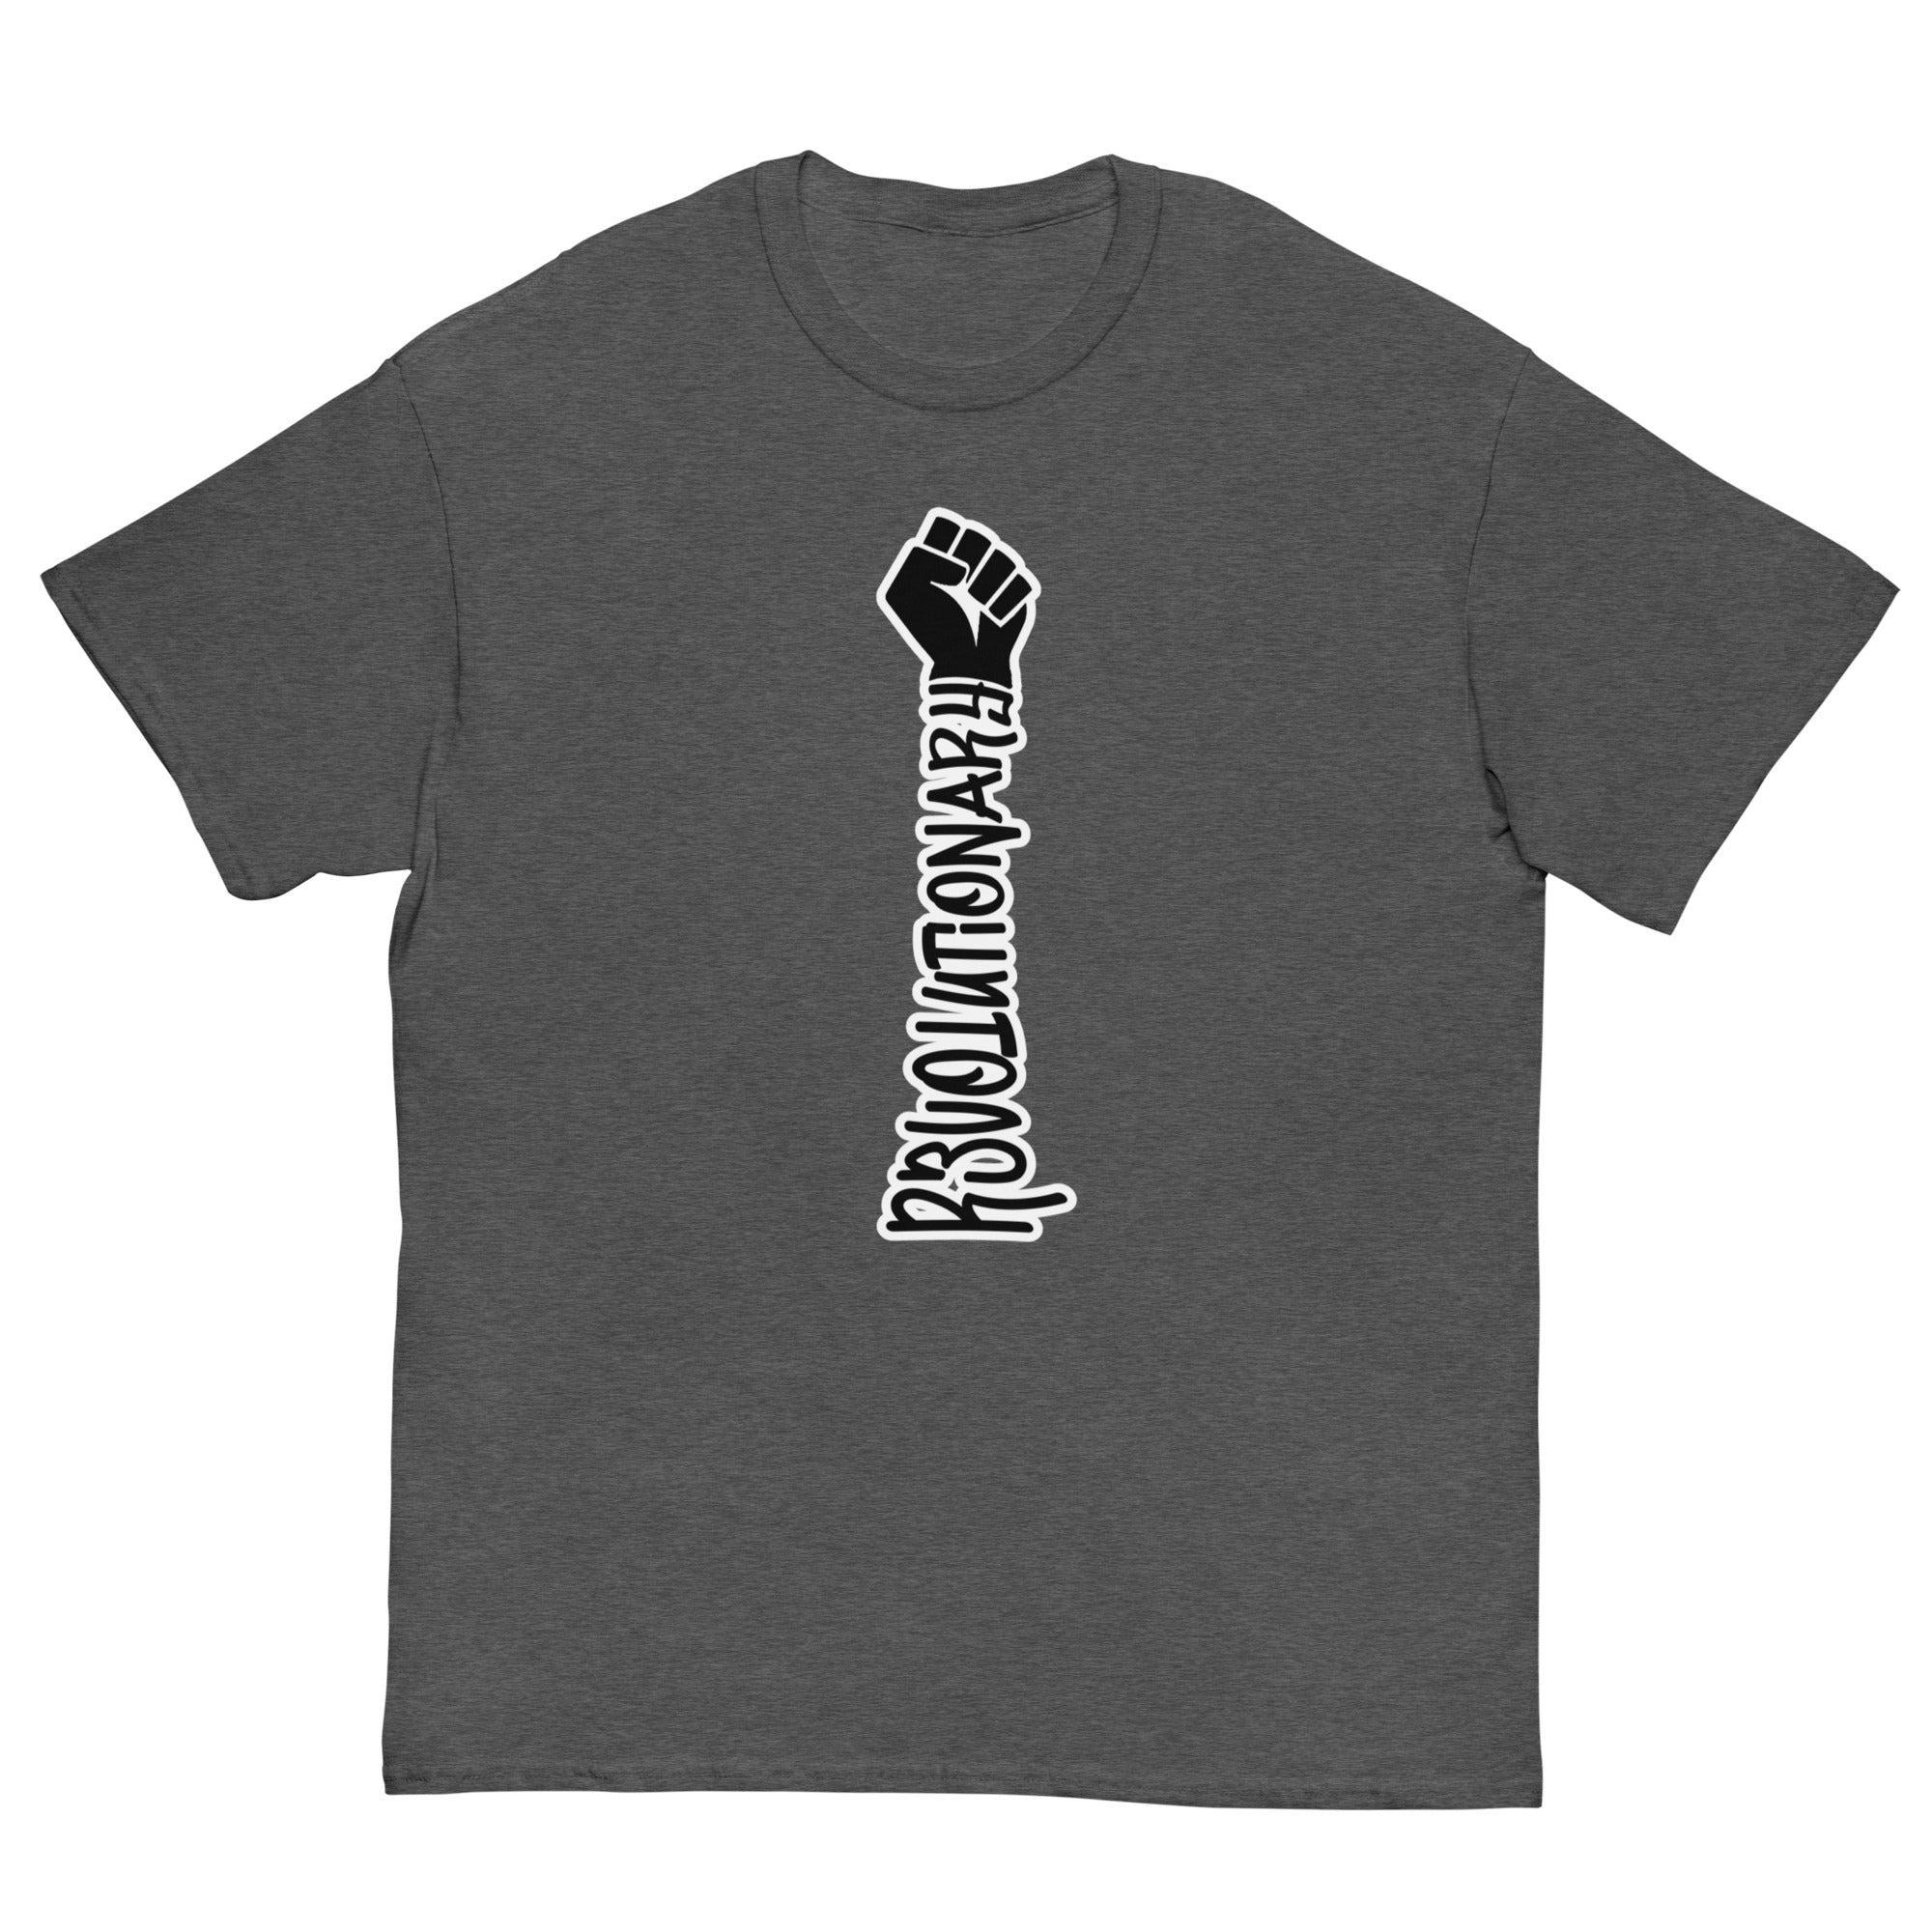 REVOLUTIONARY - Men's Classic T-Shirt - Beats 4 Hope